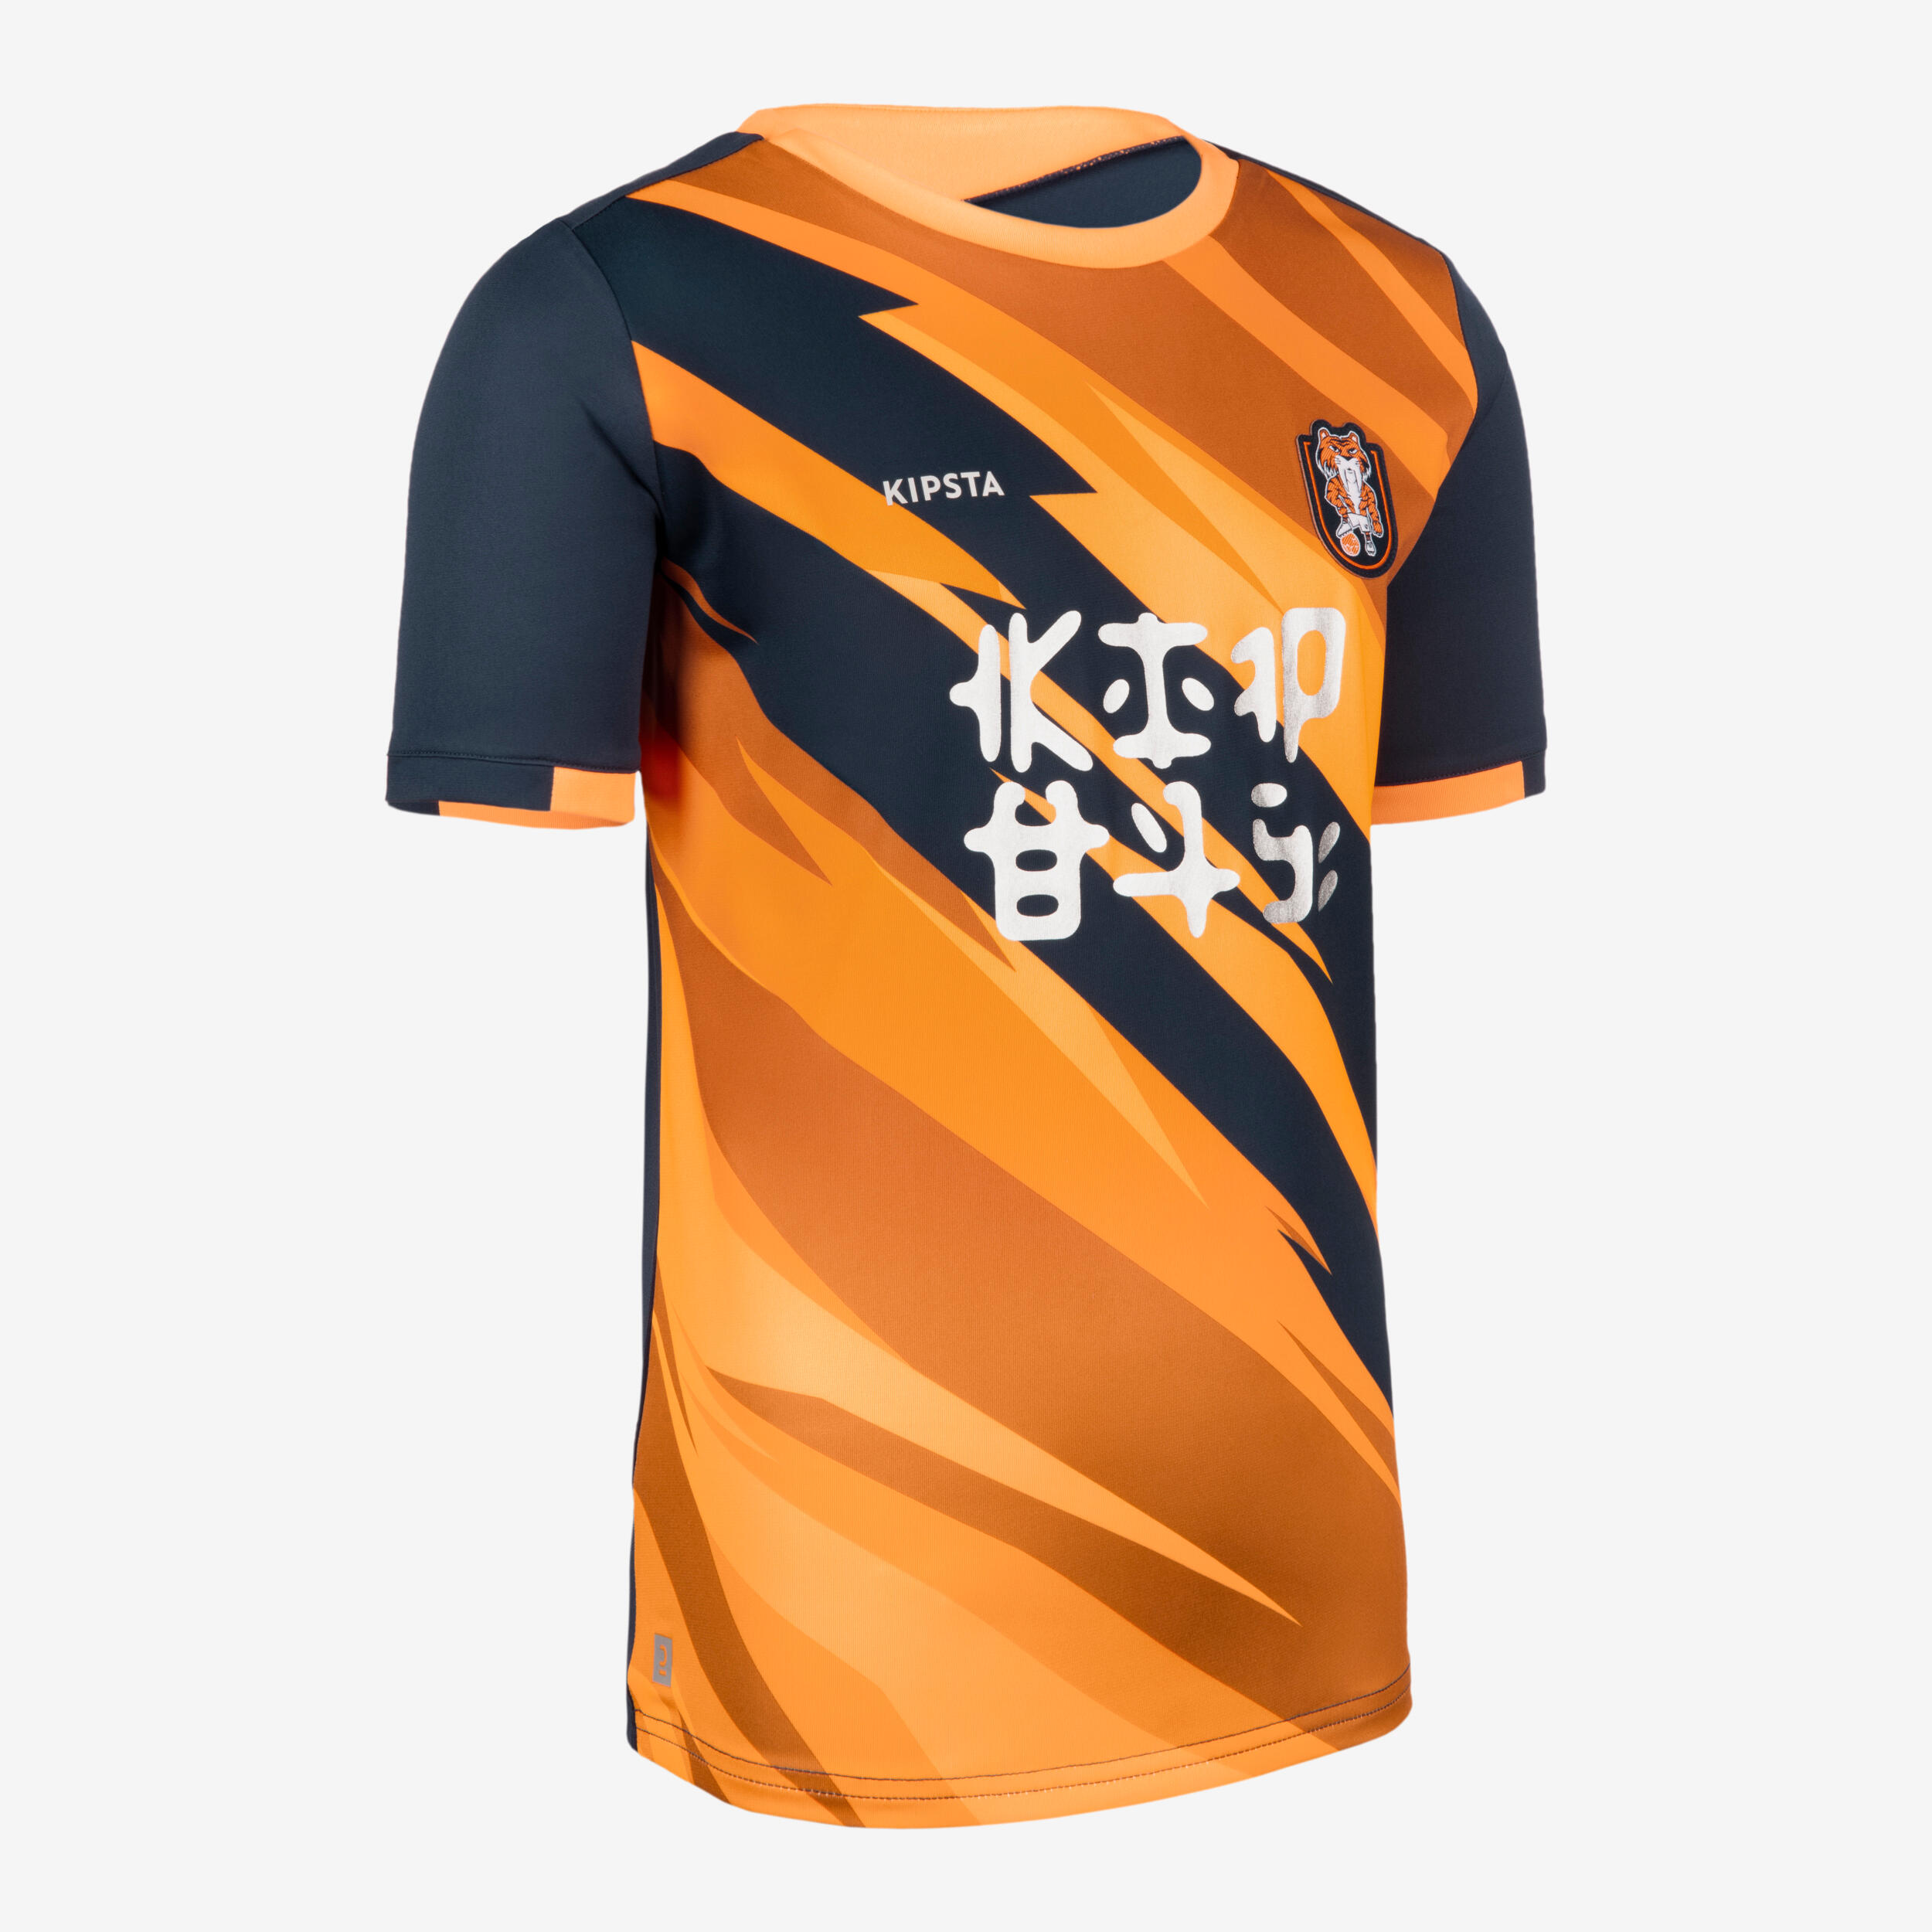 KIPSTA Kids' Football Short-Sleeved Shirt Kids Tiger - Orange/Blue